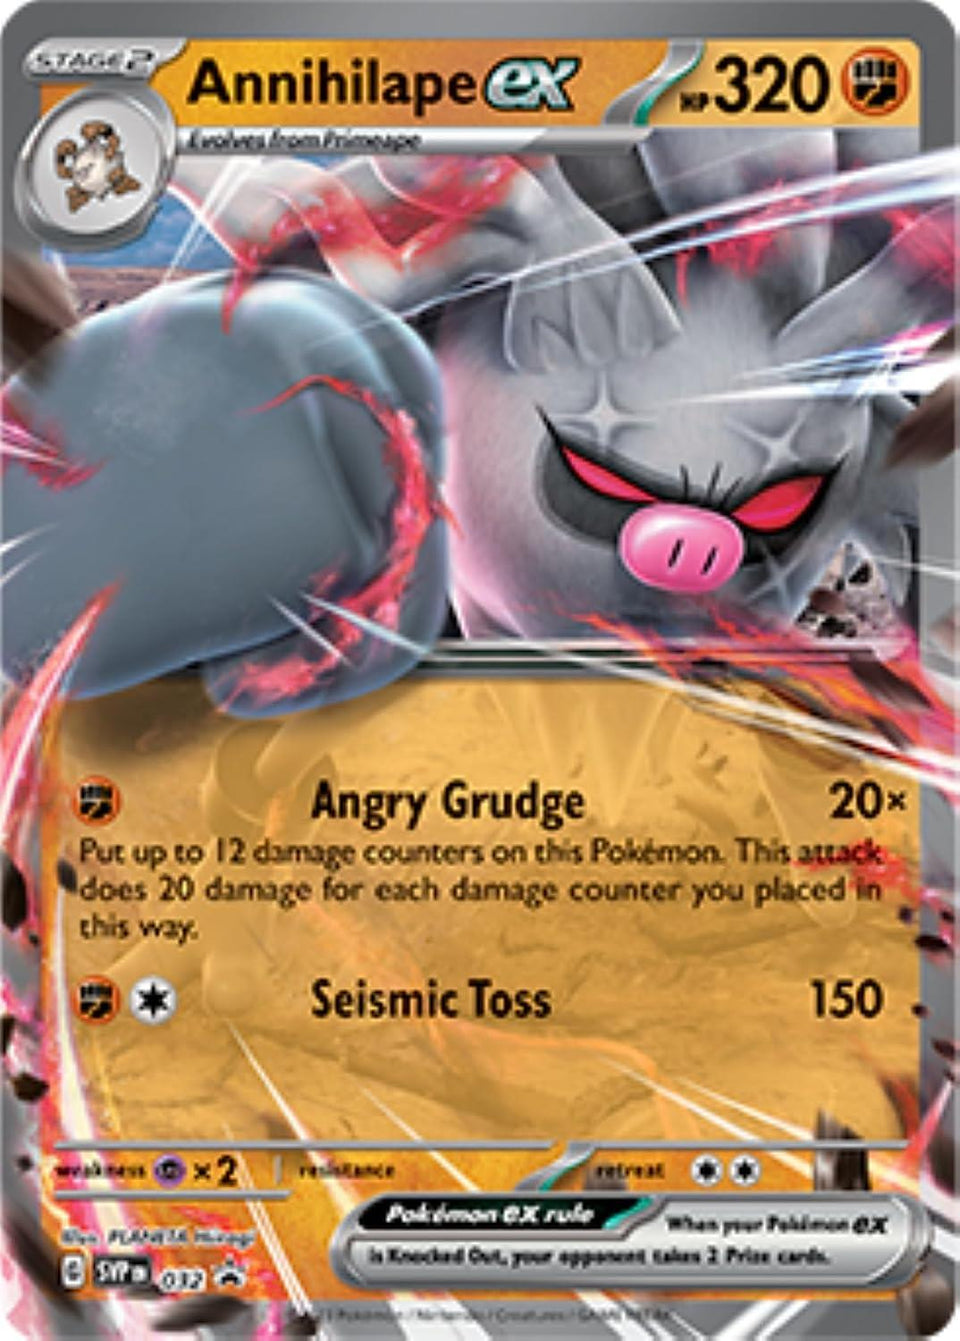 Pokemon TCG Annihilape EX Box 4 Booster Packs Promo Trading Card Game